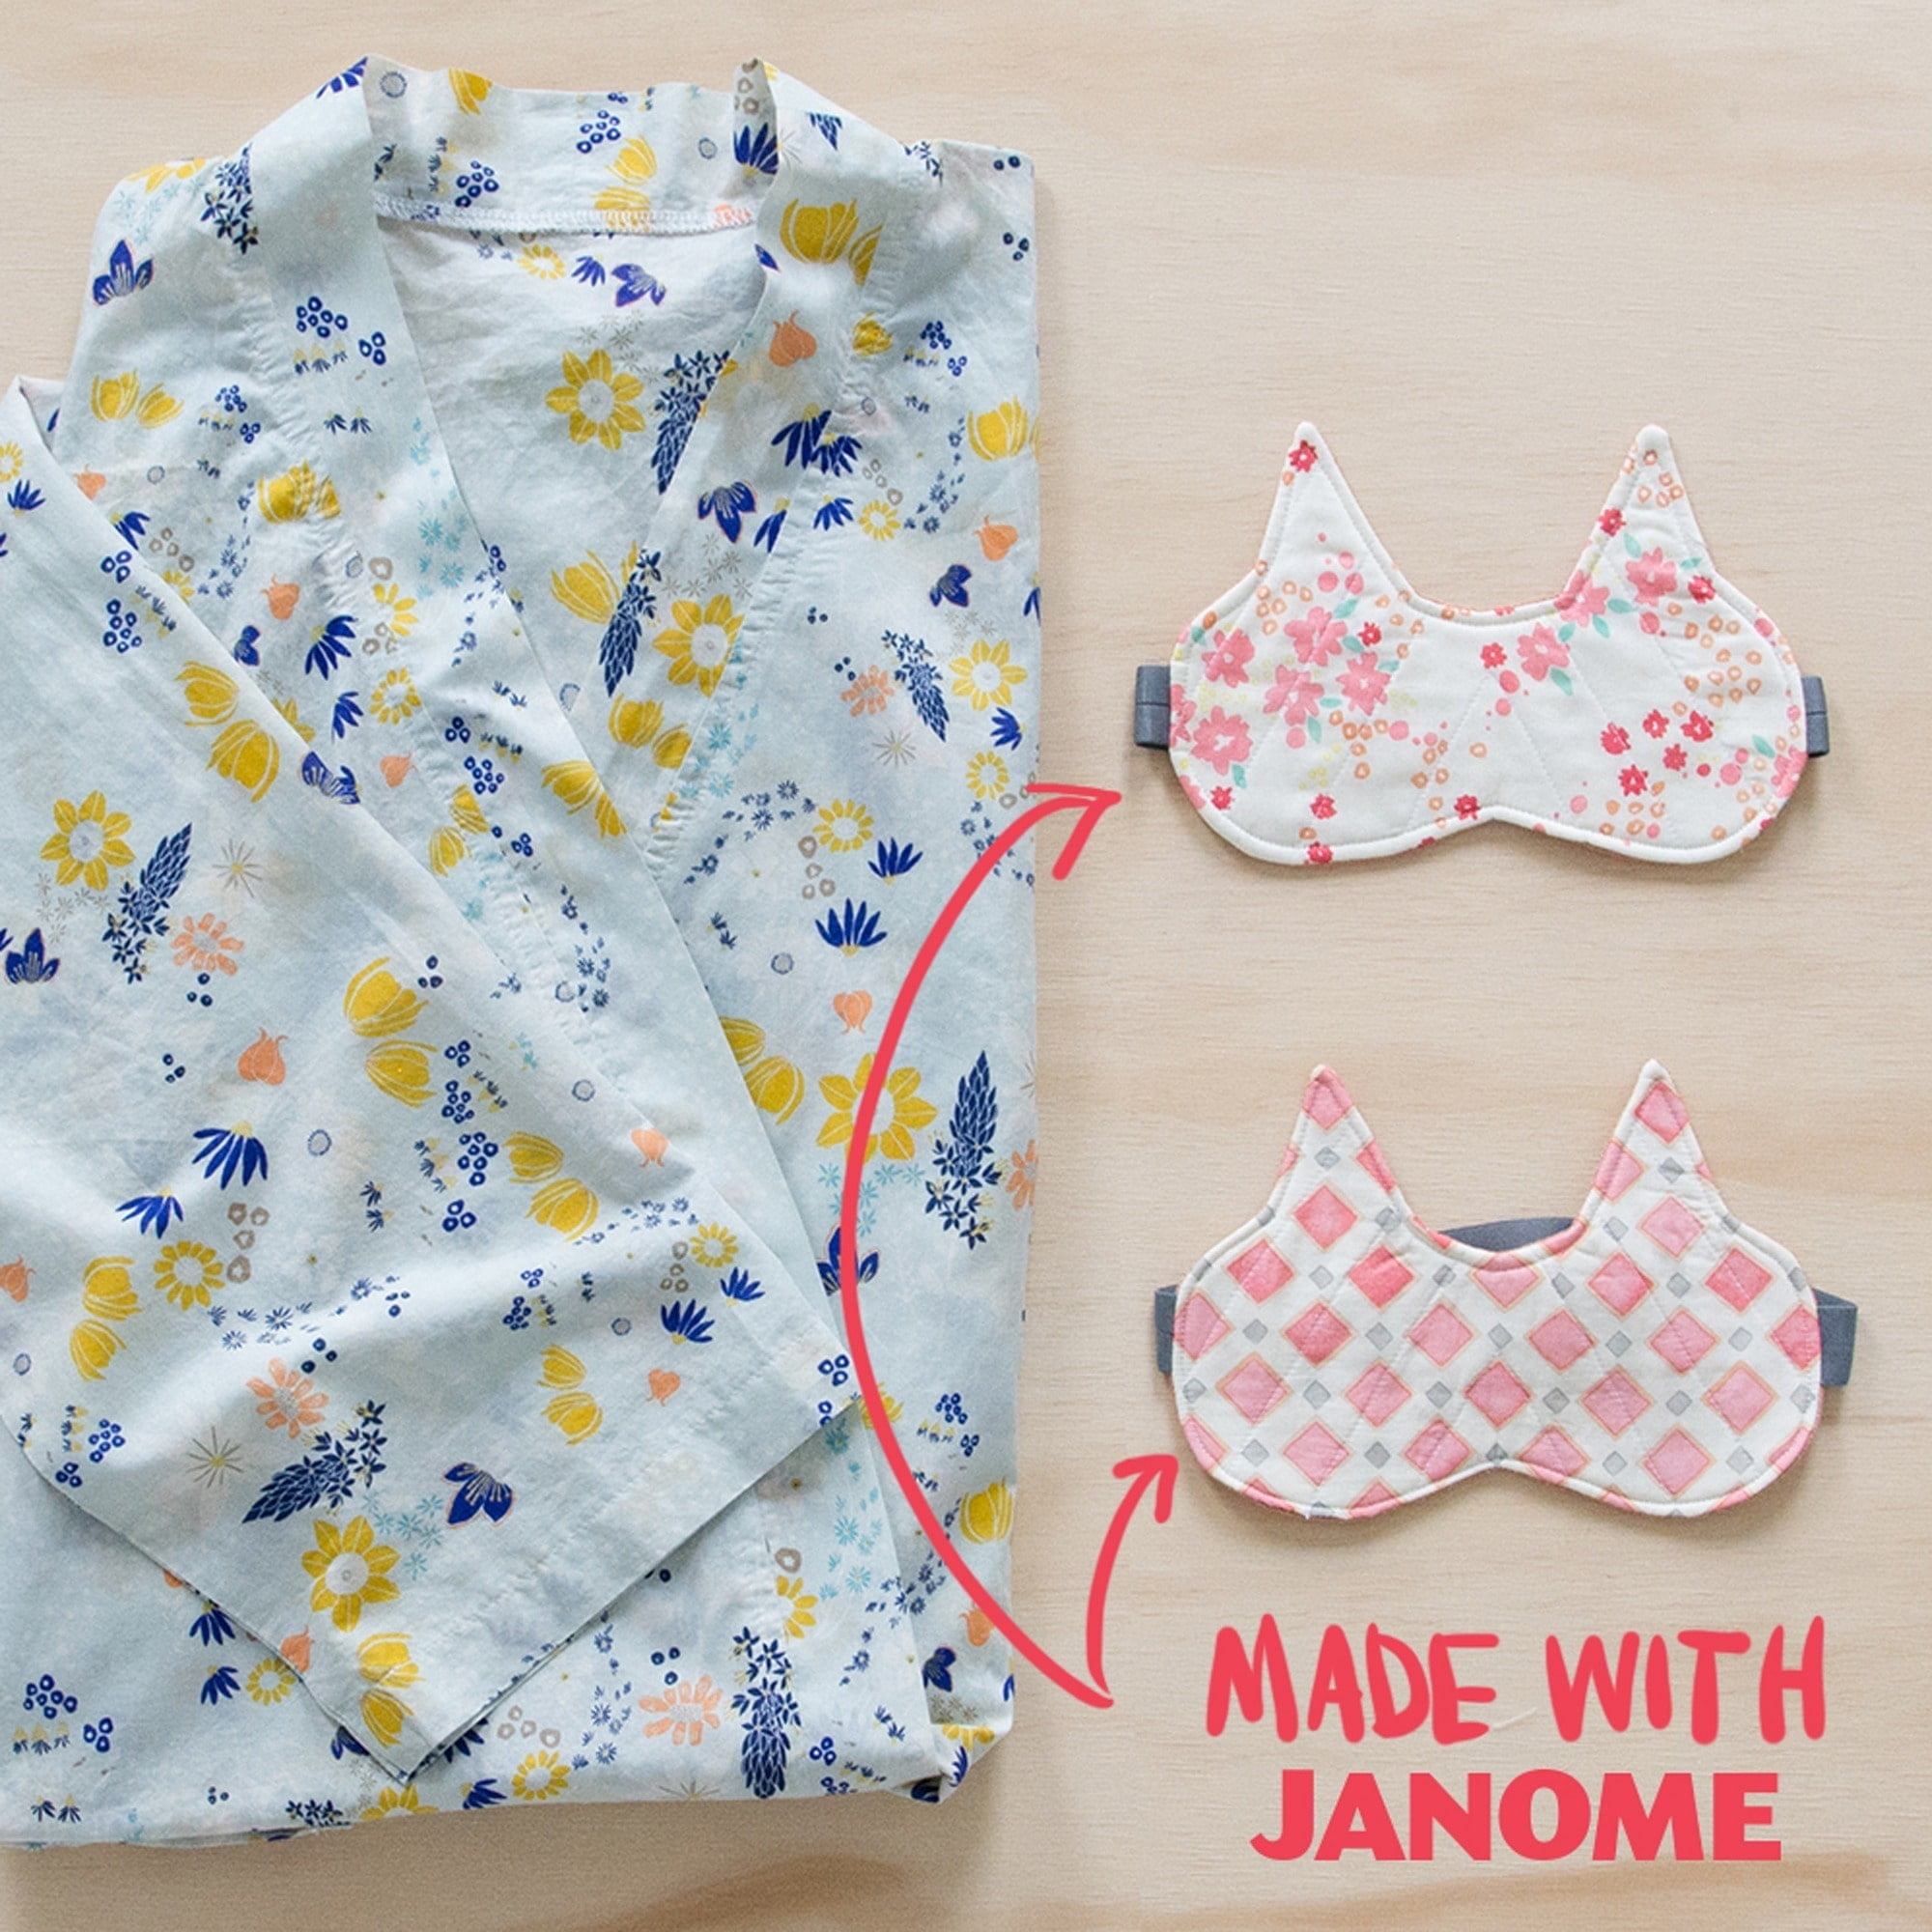 Janome 15-Stitch Color Me Sewing Machine Standard - 8624366